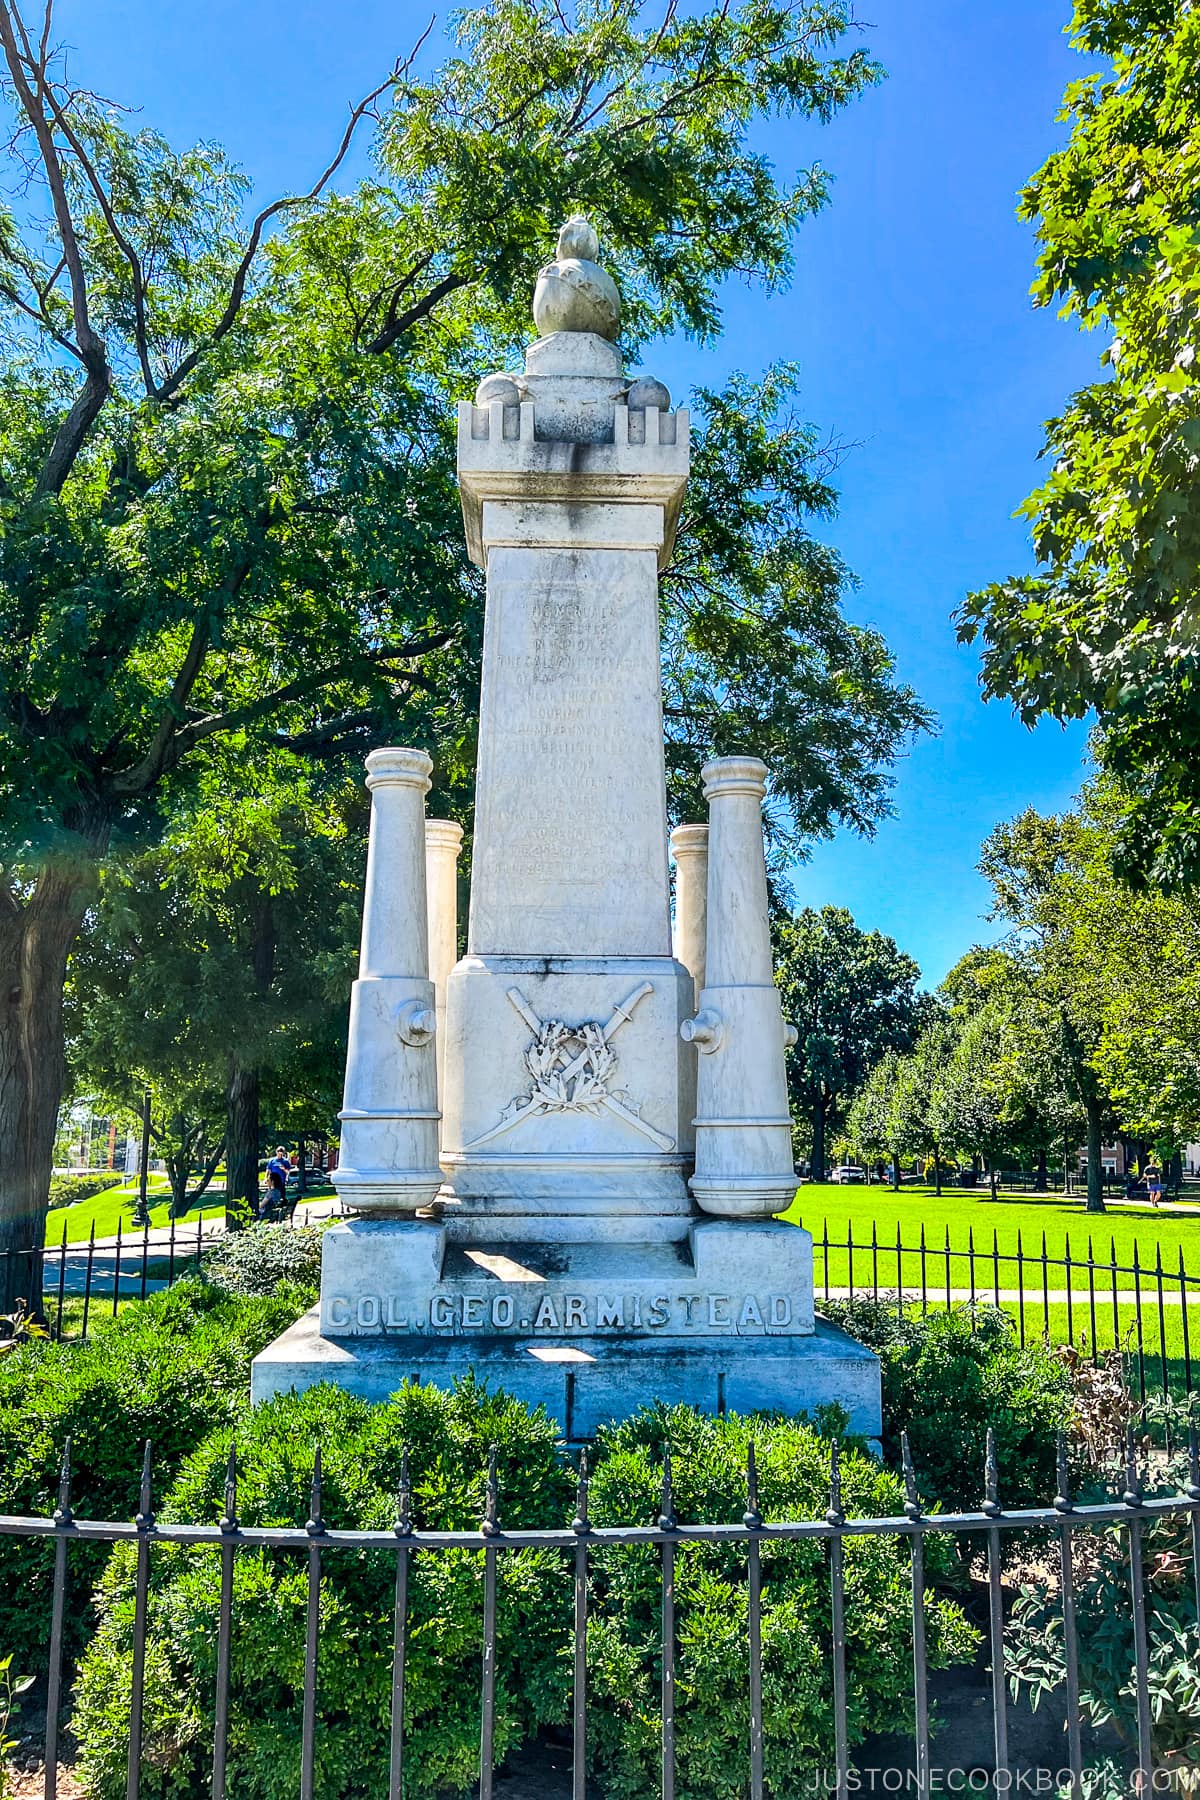 Armistead statue at Federal Hill Park